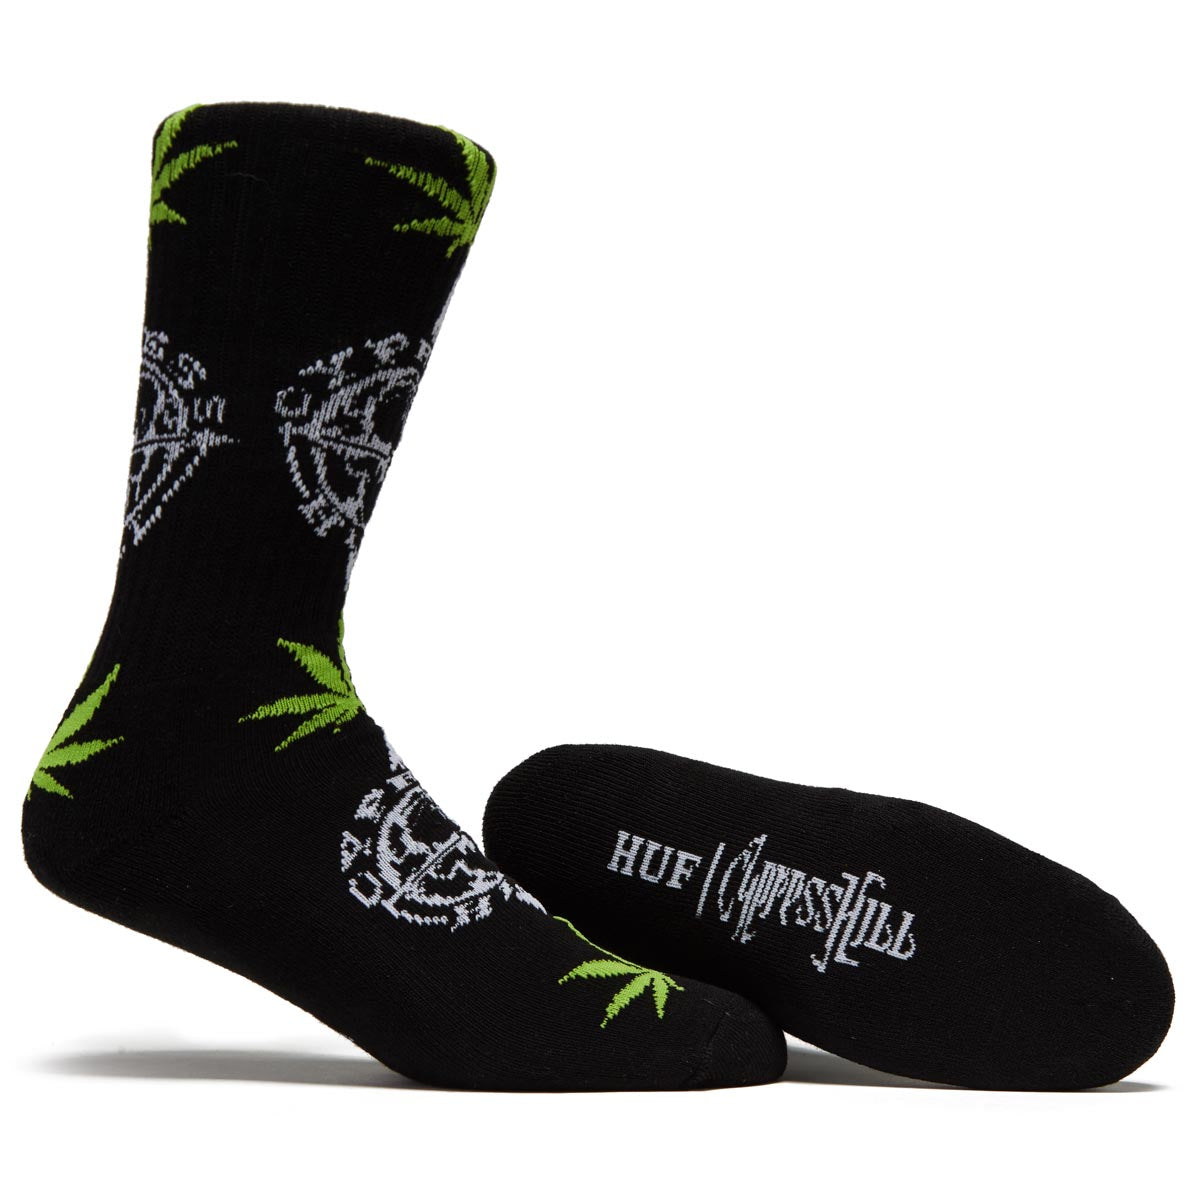 Huf x Cypress Hill Compass Plantlife Socks - Black image 2